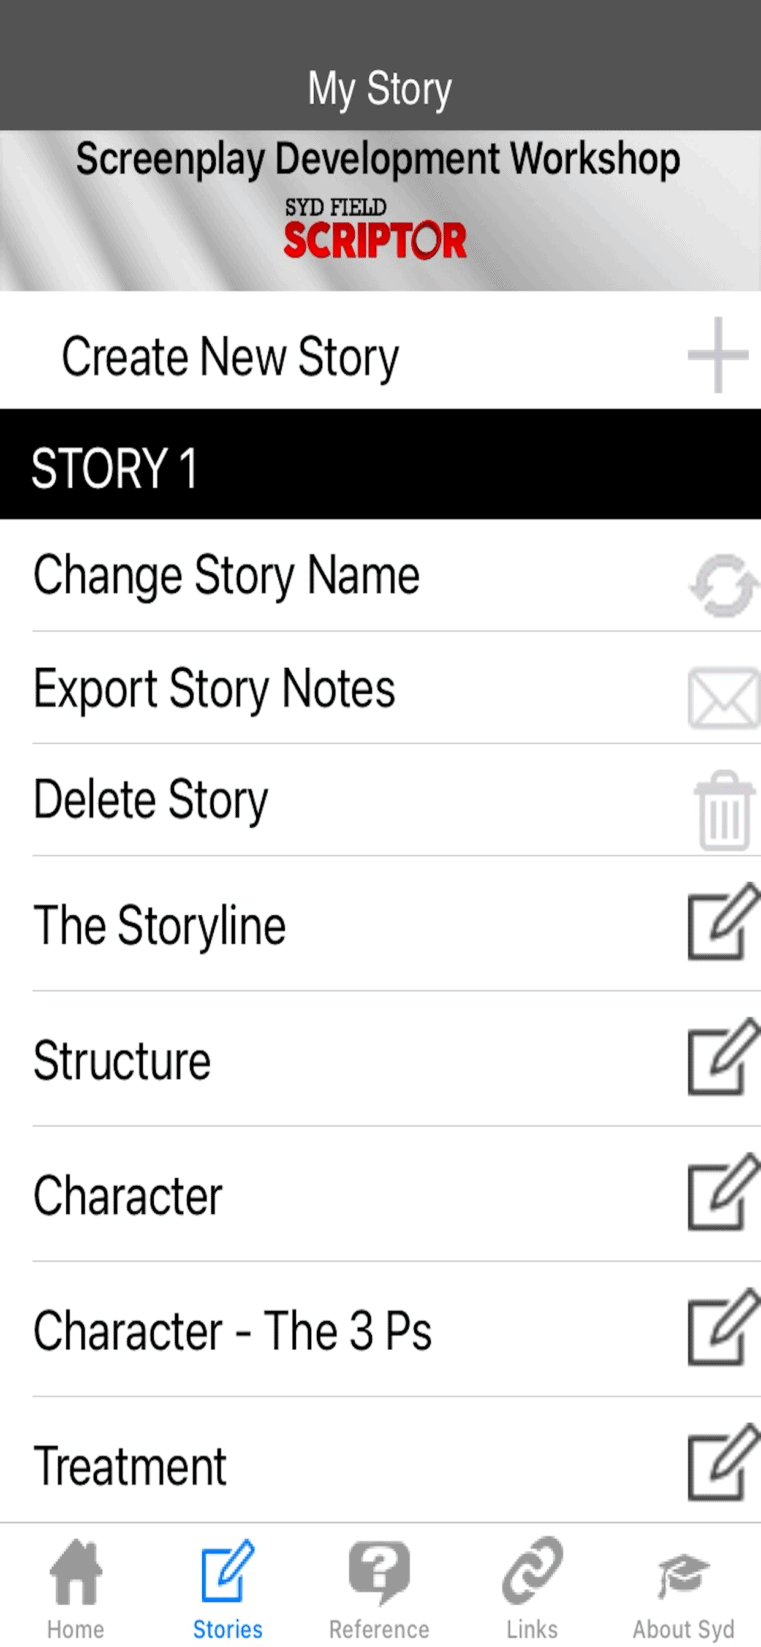 5 Stories phone - Screenplay Development Workshop - Syd Field Scriptor